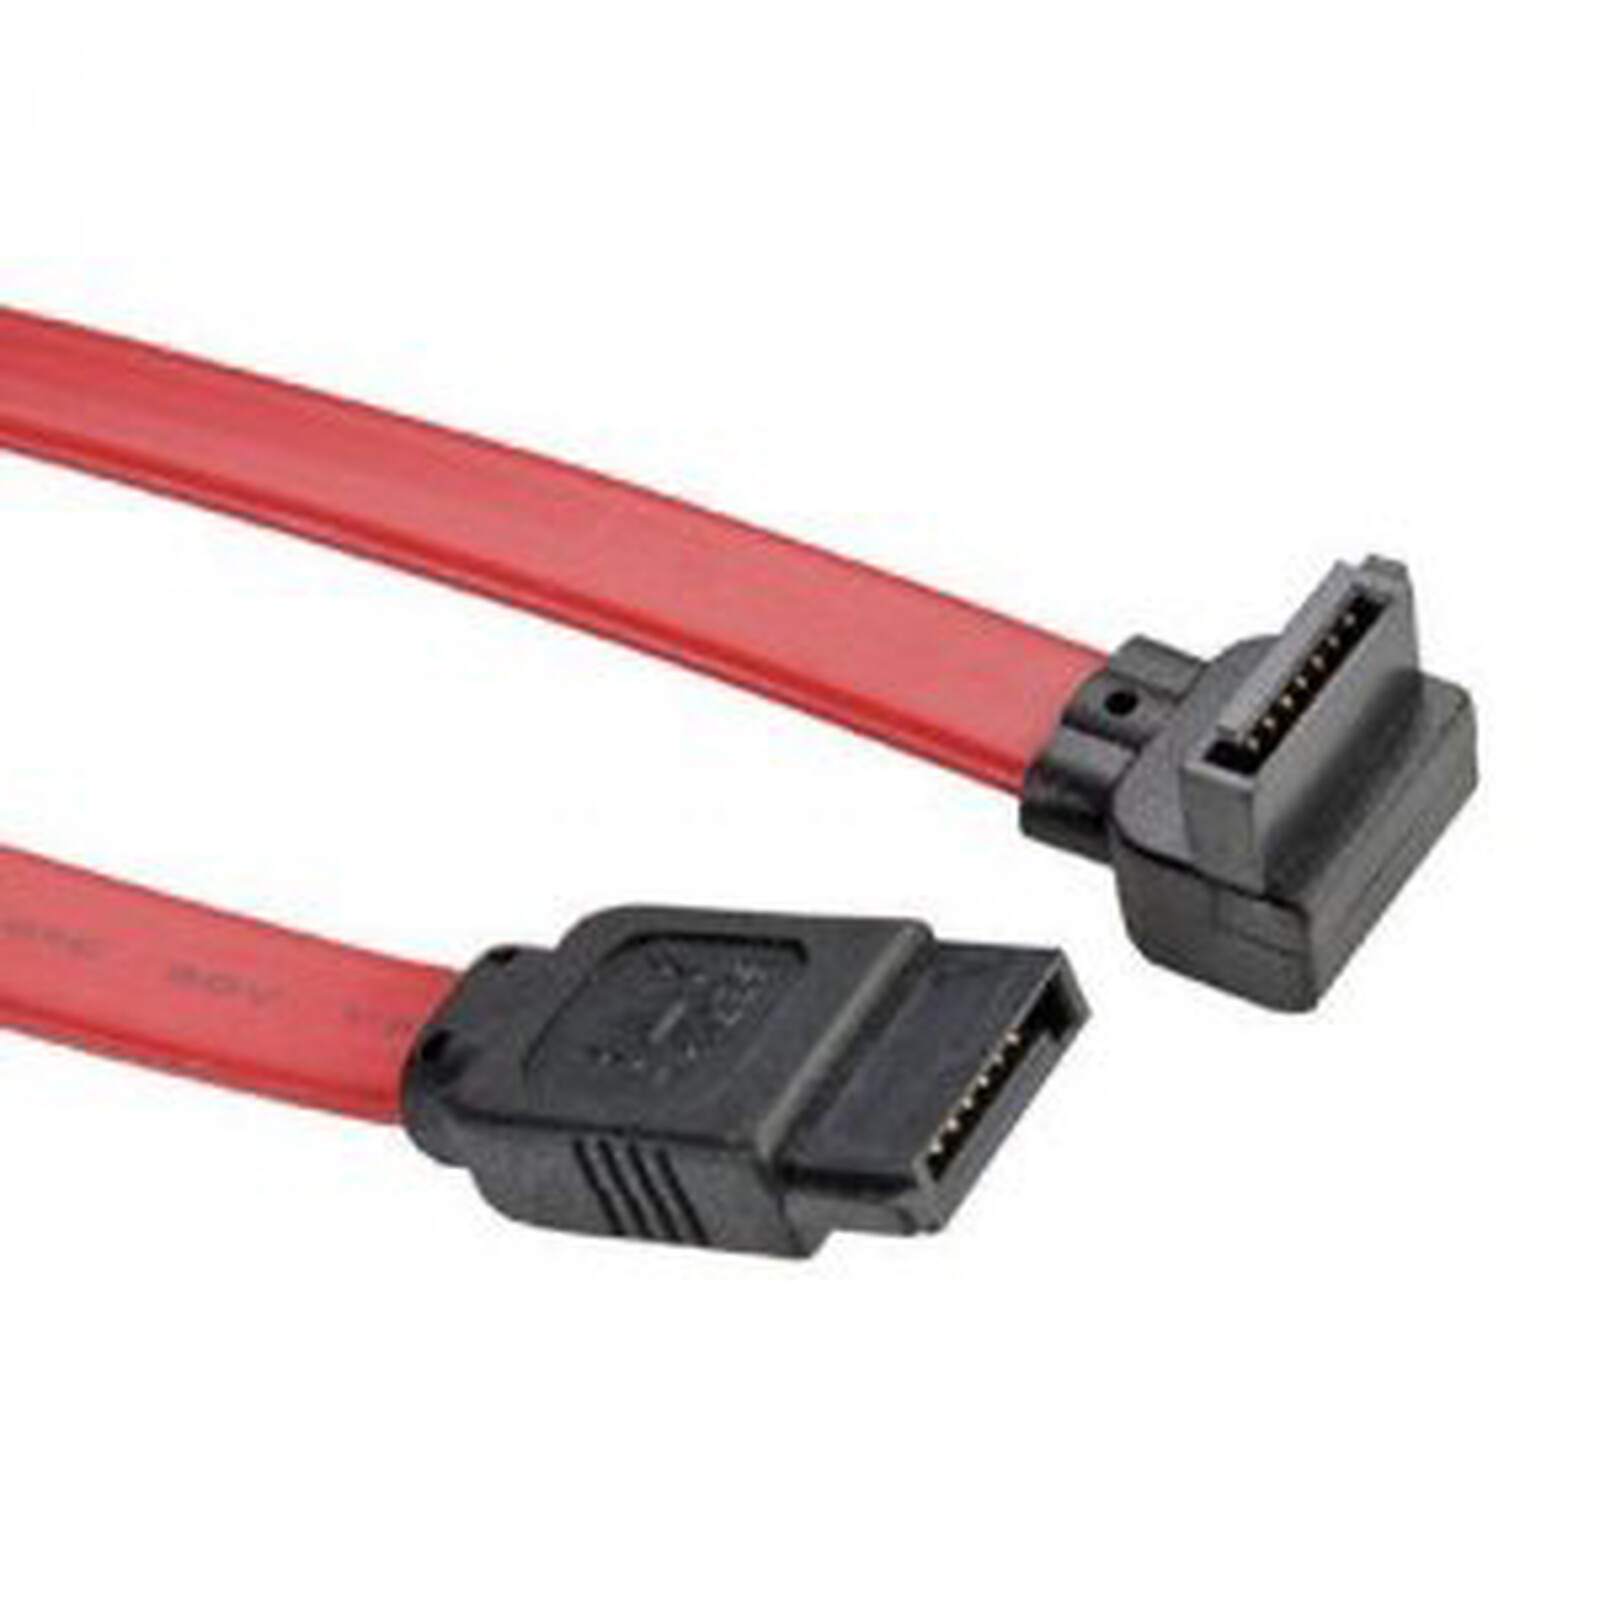 Cable SATA angular hacia abajo (50 cm) - Serial ATA - LDLC